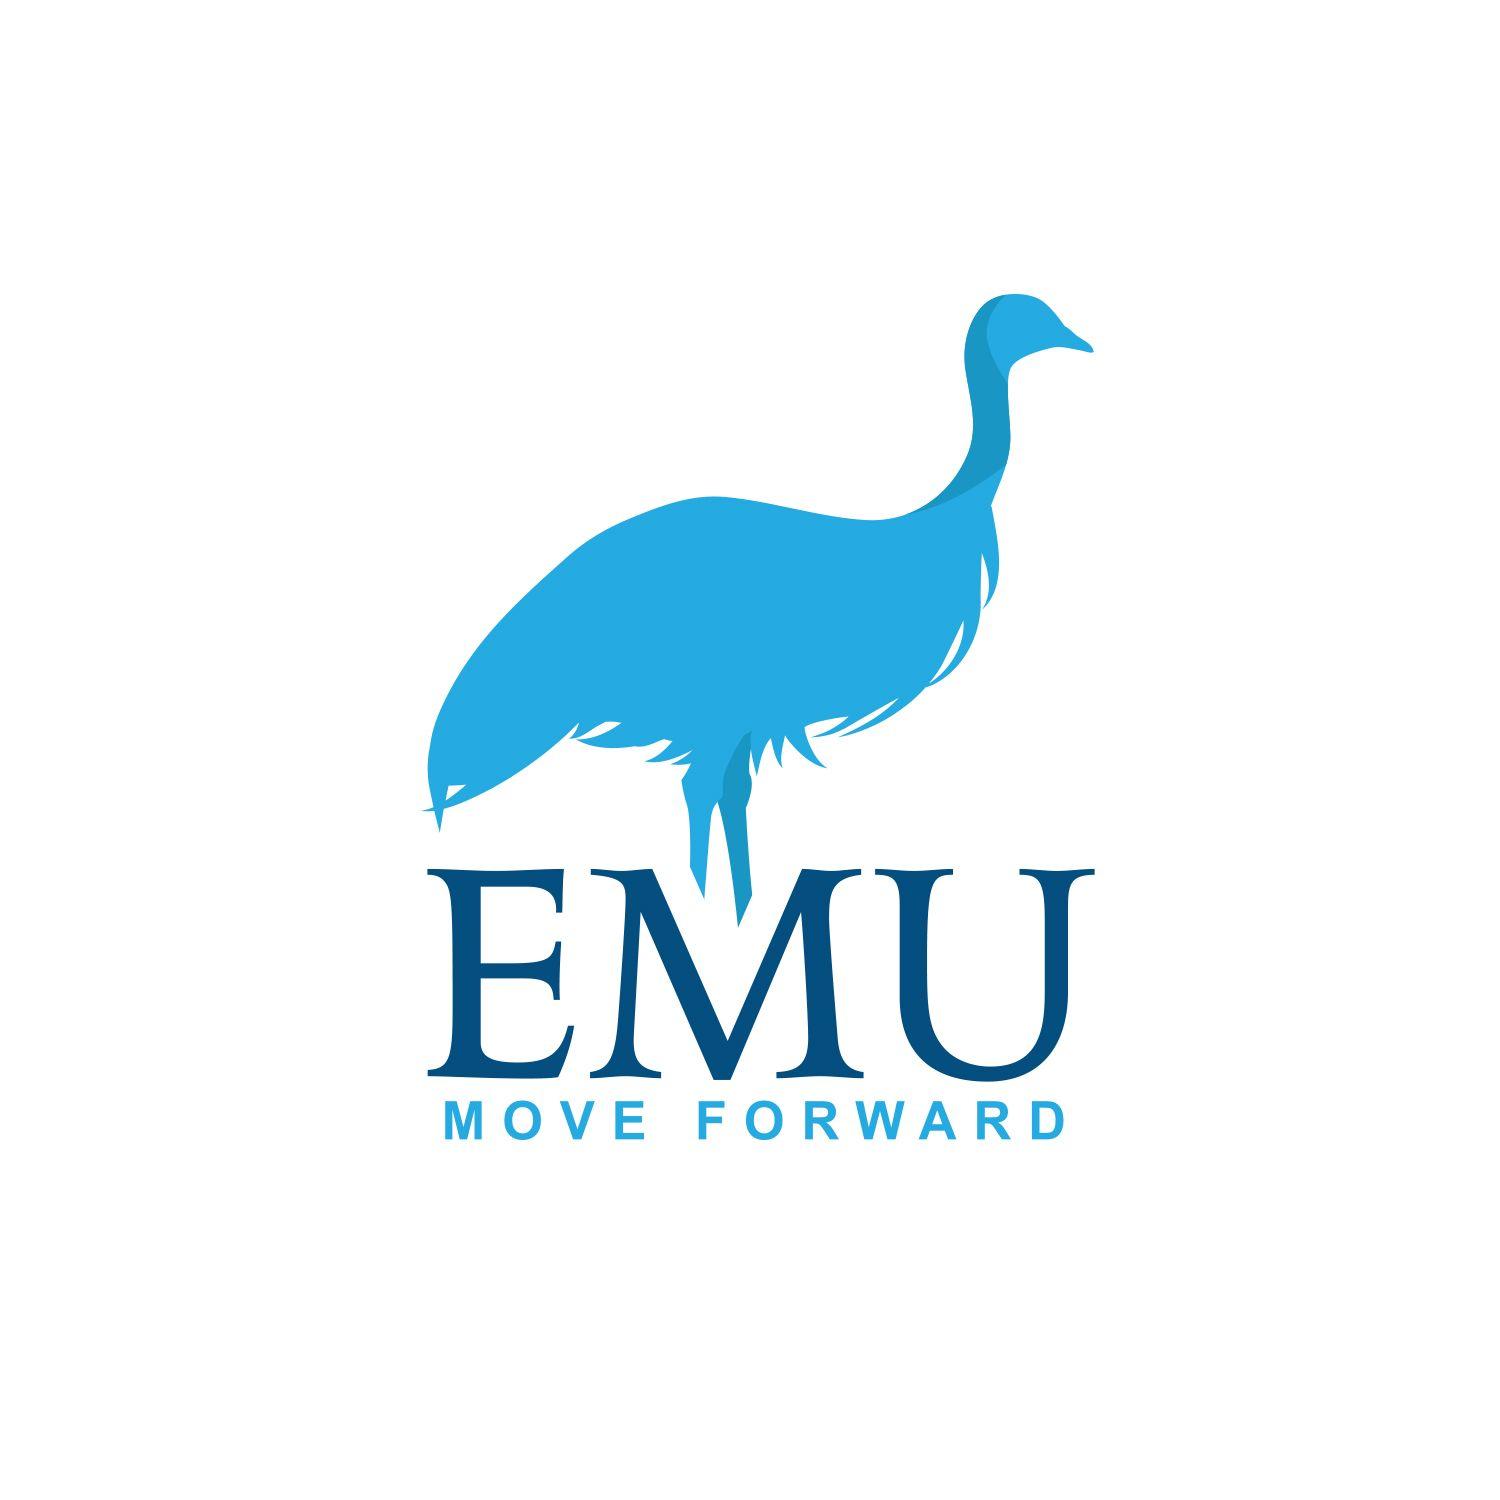 Emu Logo - Business Logo Design for EMU by Darlene Munro | Design #10881678